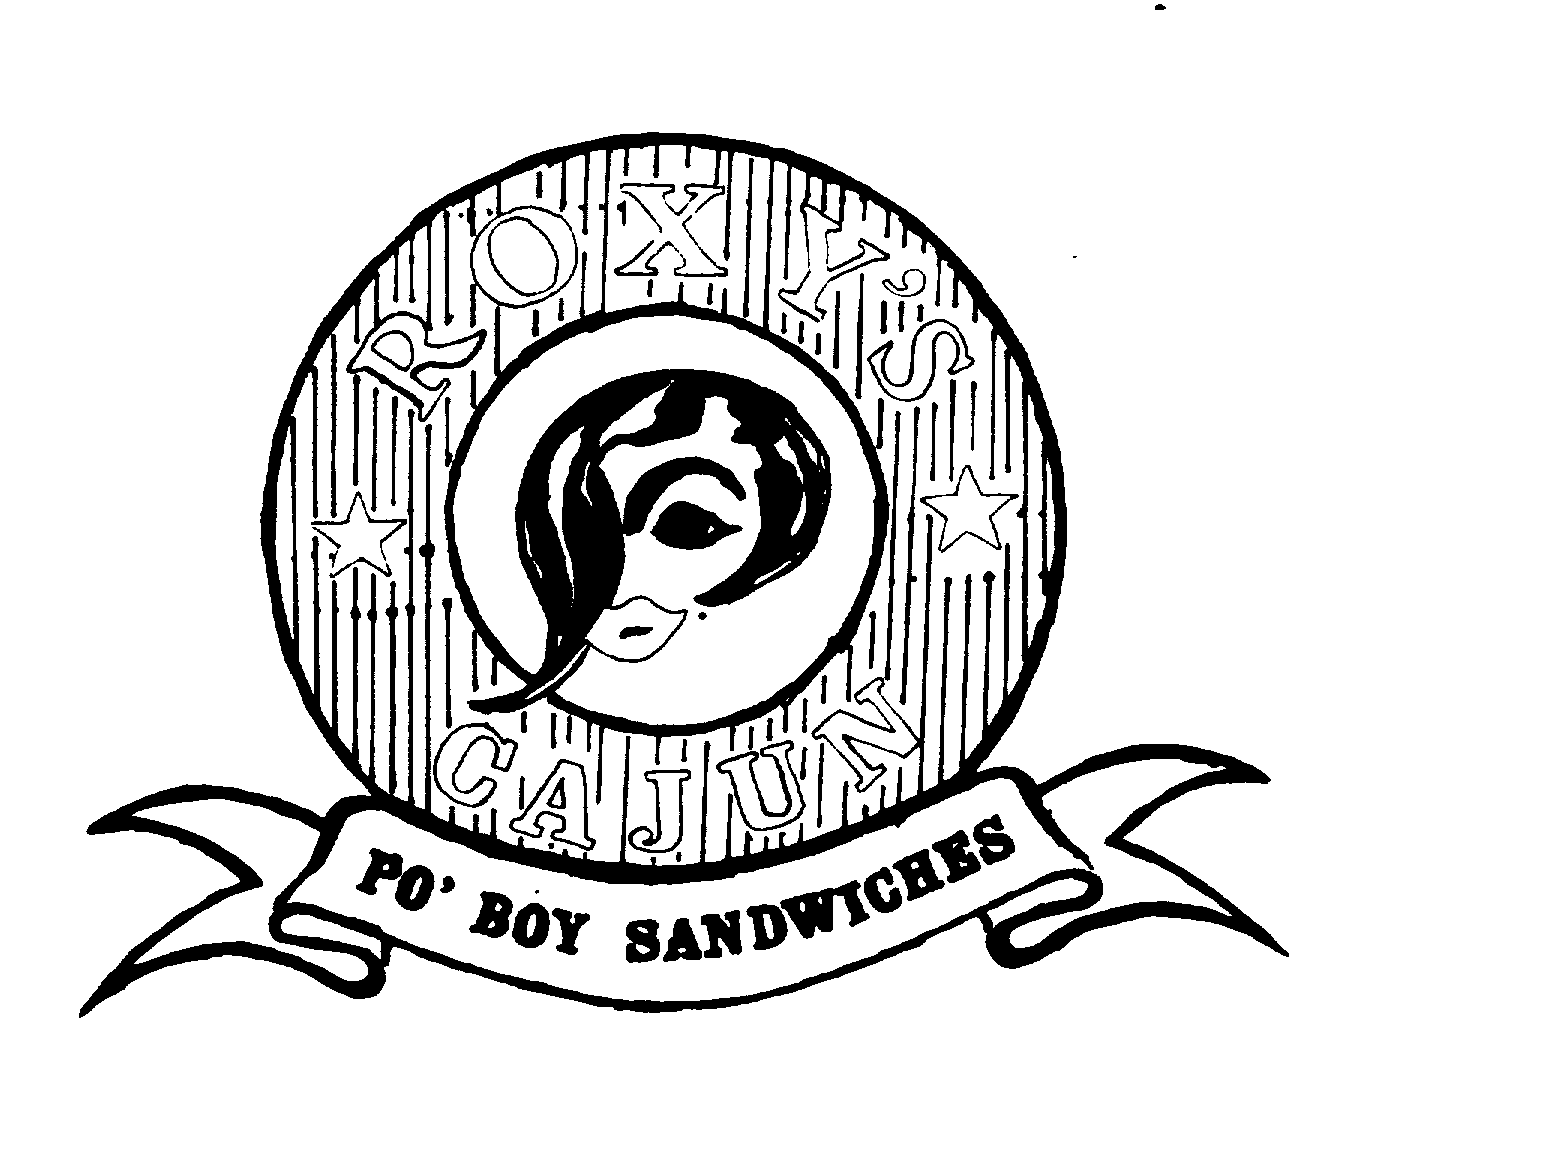  ROXY'S CAJUN PO' BOY SANDWICHES